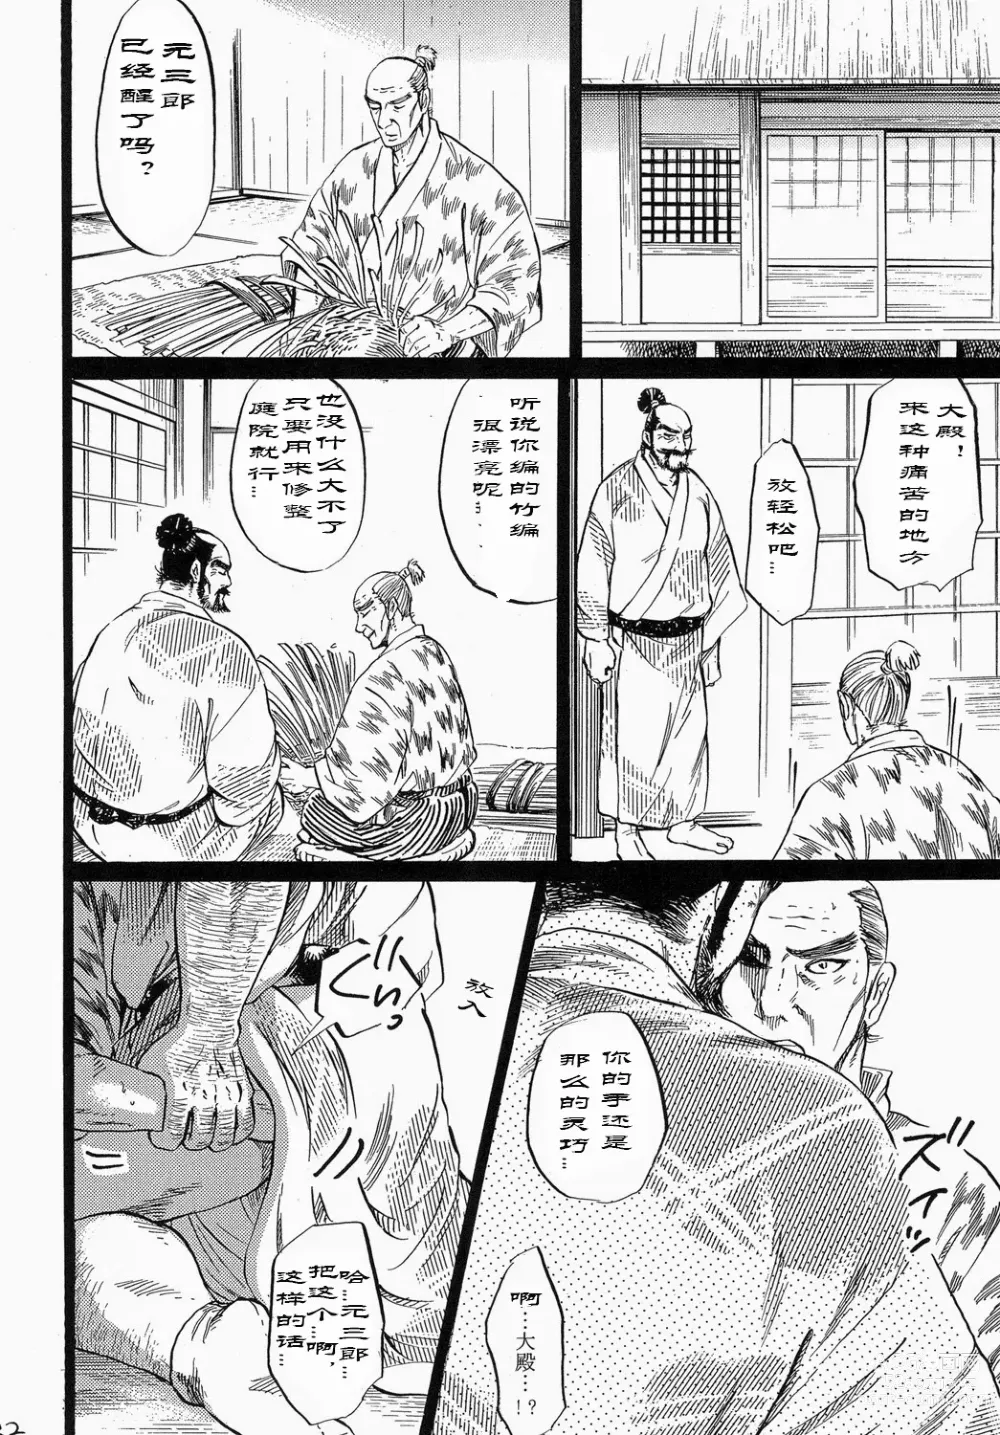 Page 22 of doujinshi Ootono